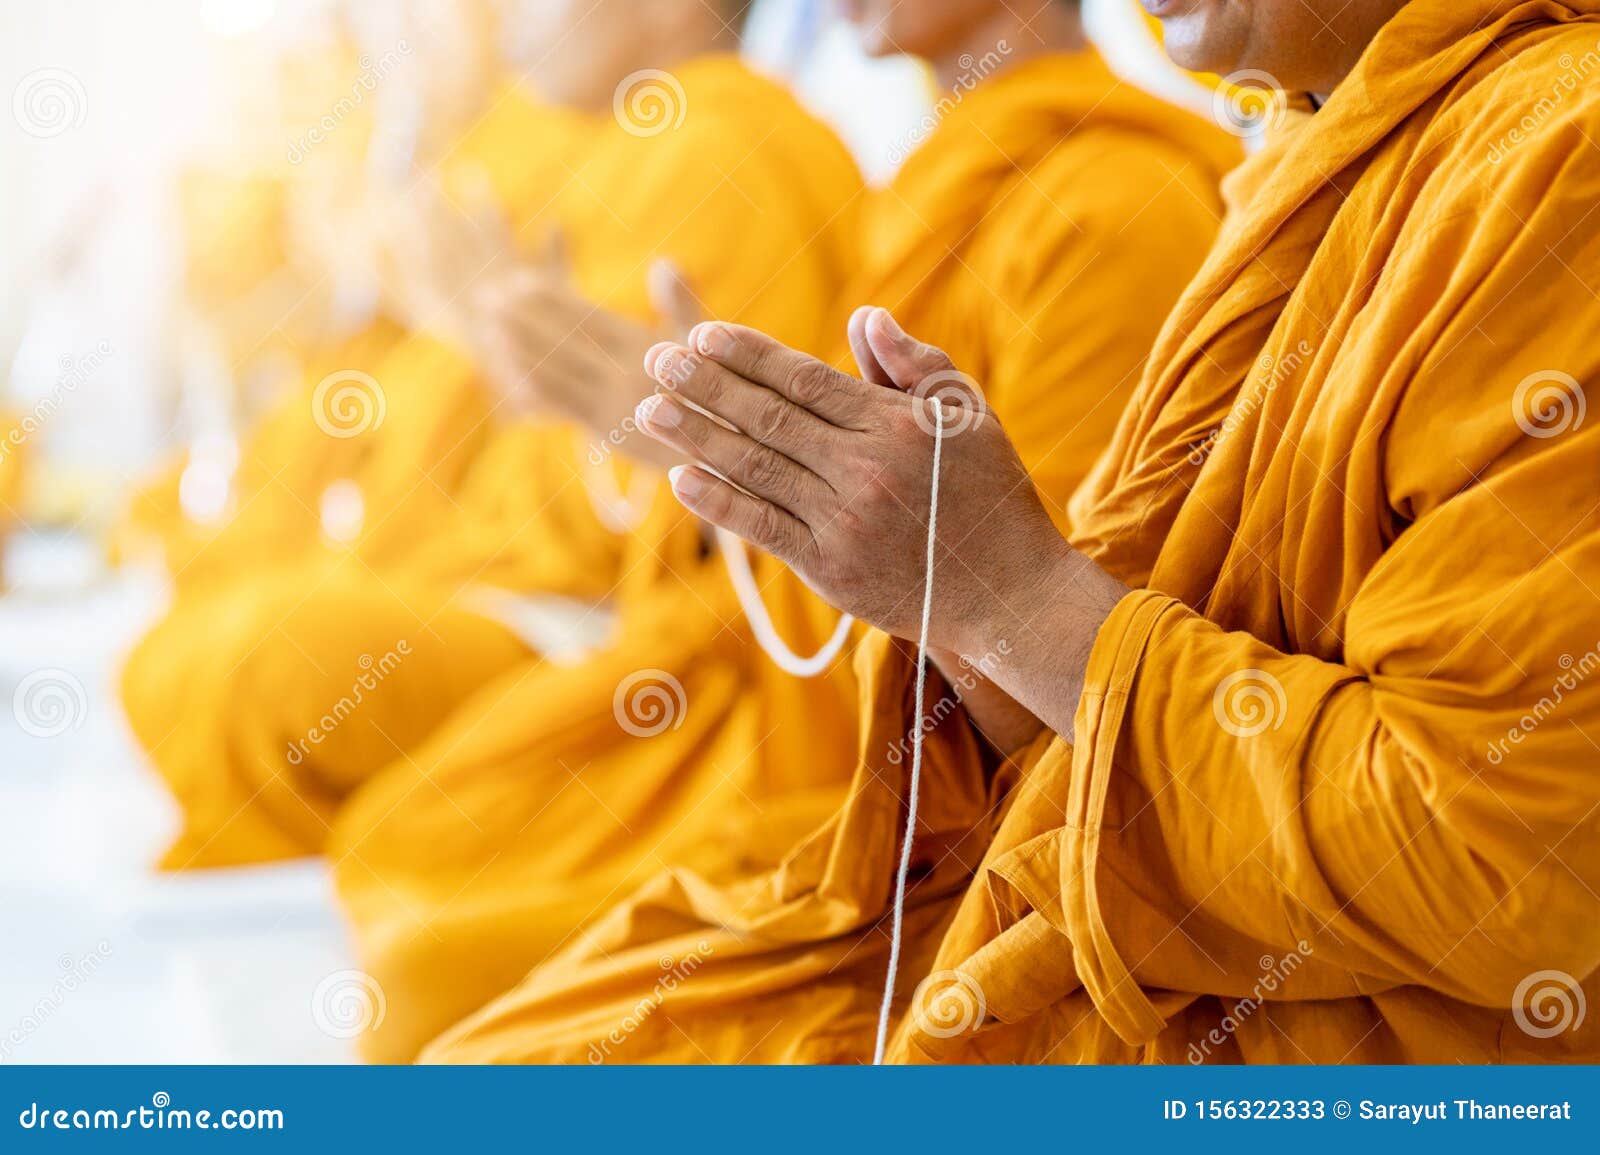 buddhist monks chant buddhist rituals